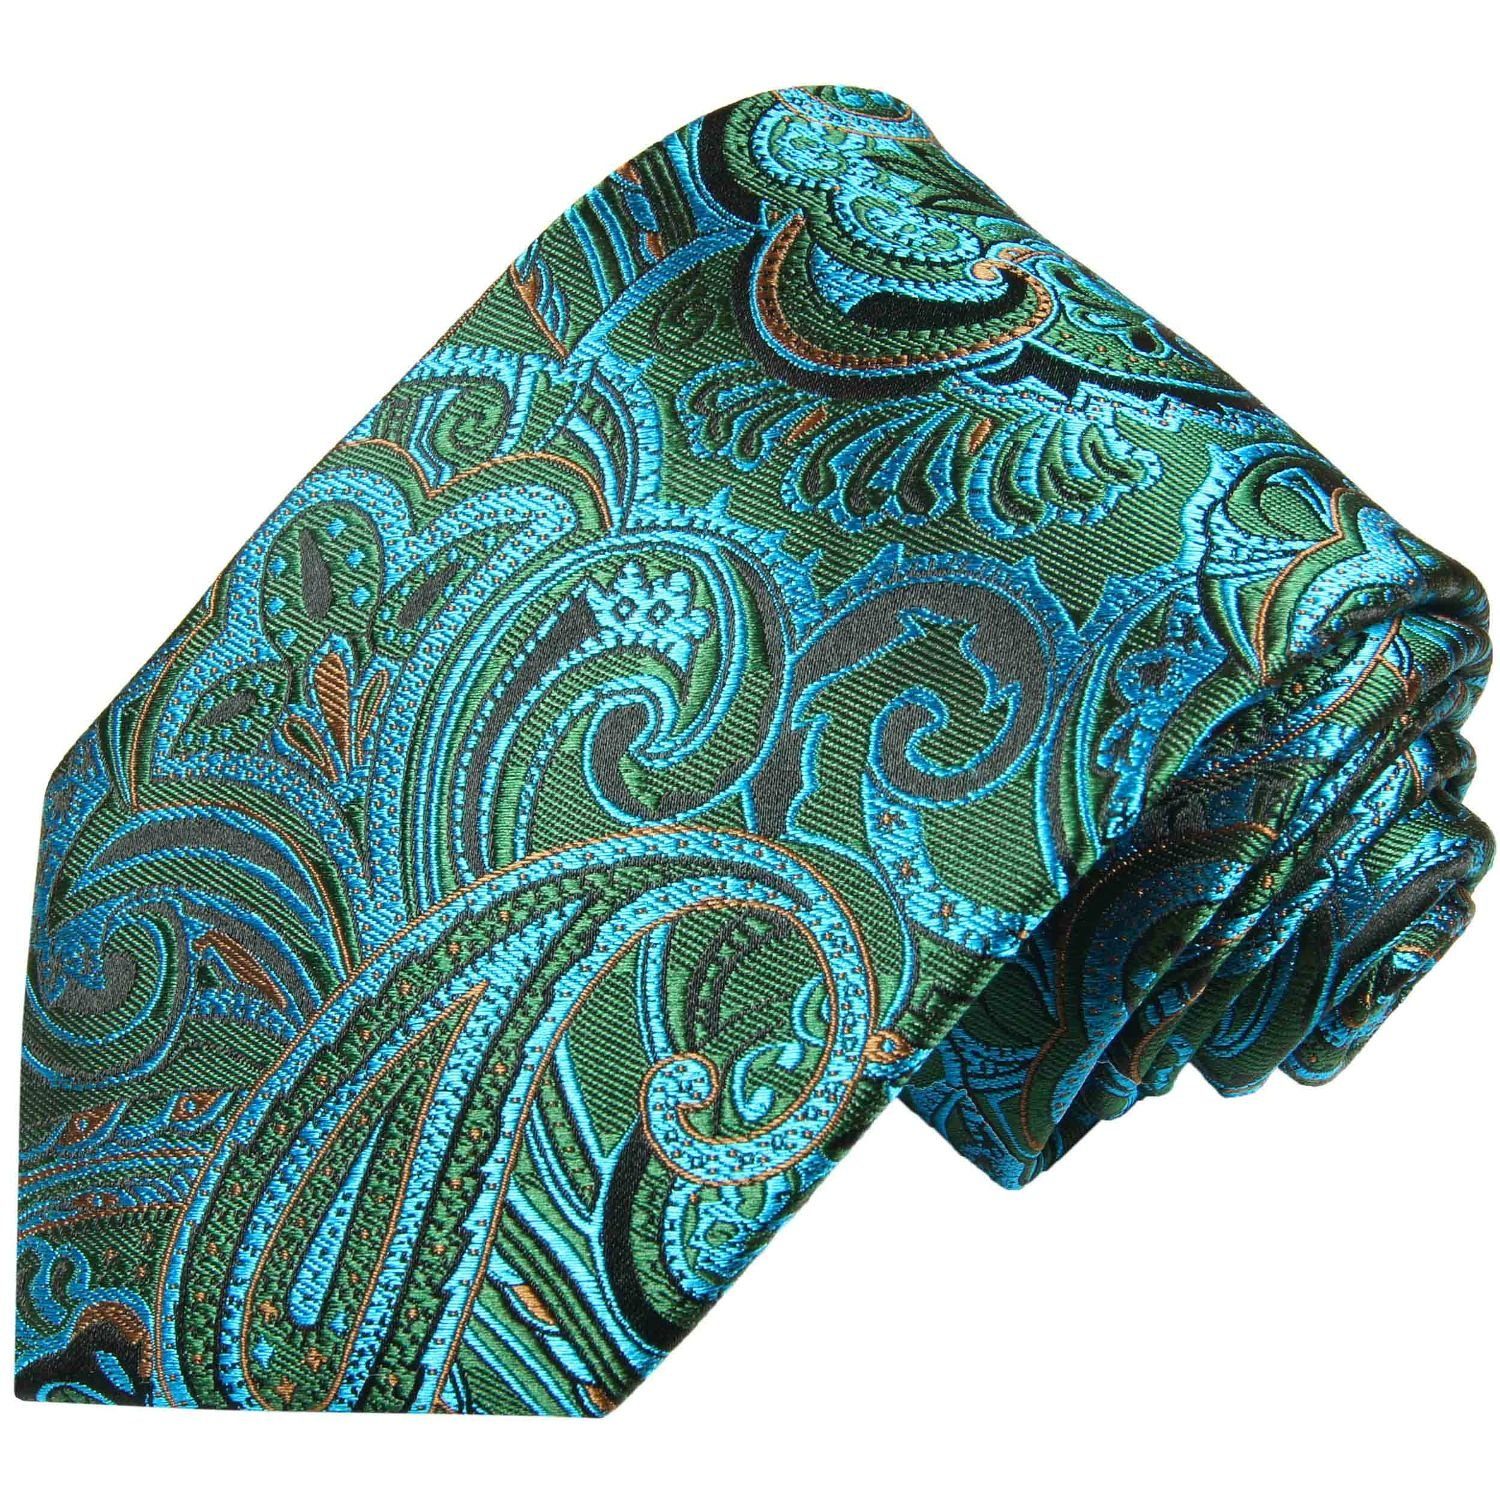 Paul Malone Krawatte Elegante Seidenkrawatte Herren Schlips paisley brokat 100% Seide Breit (8cm), blau grün türkis 2008